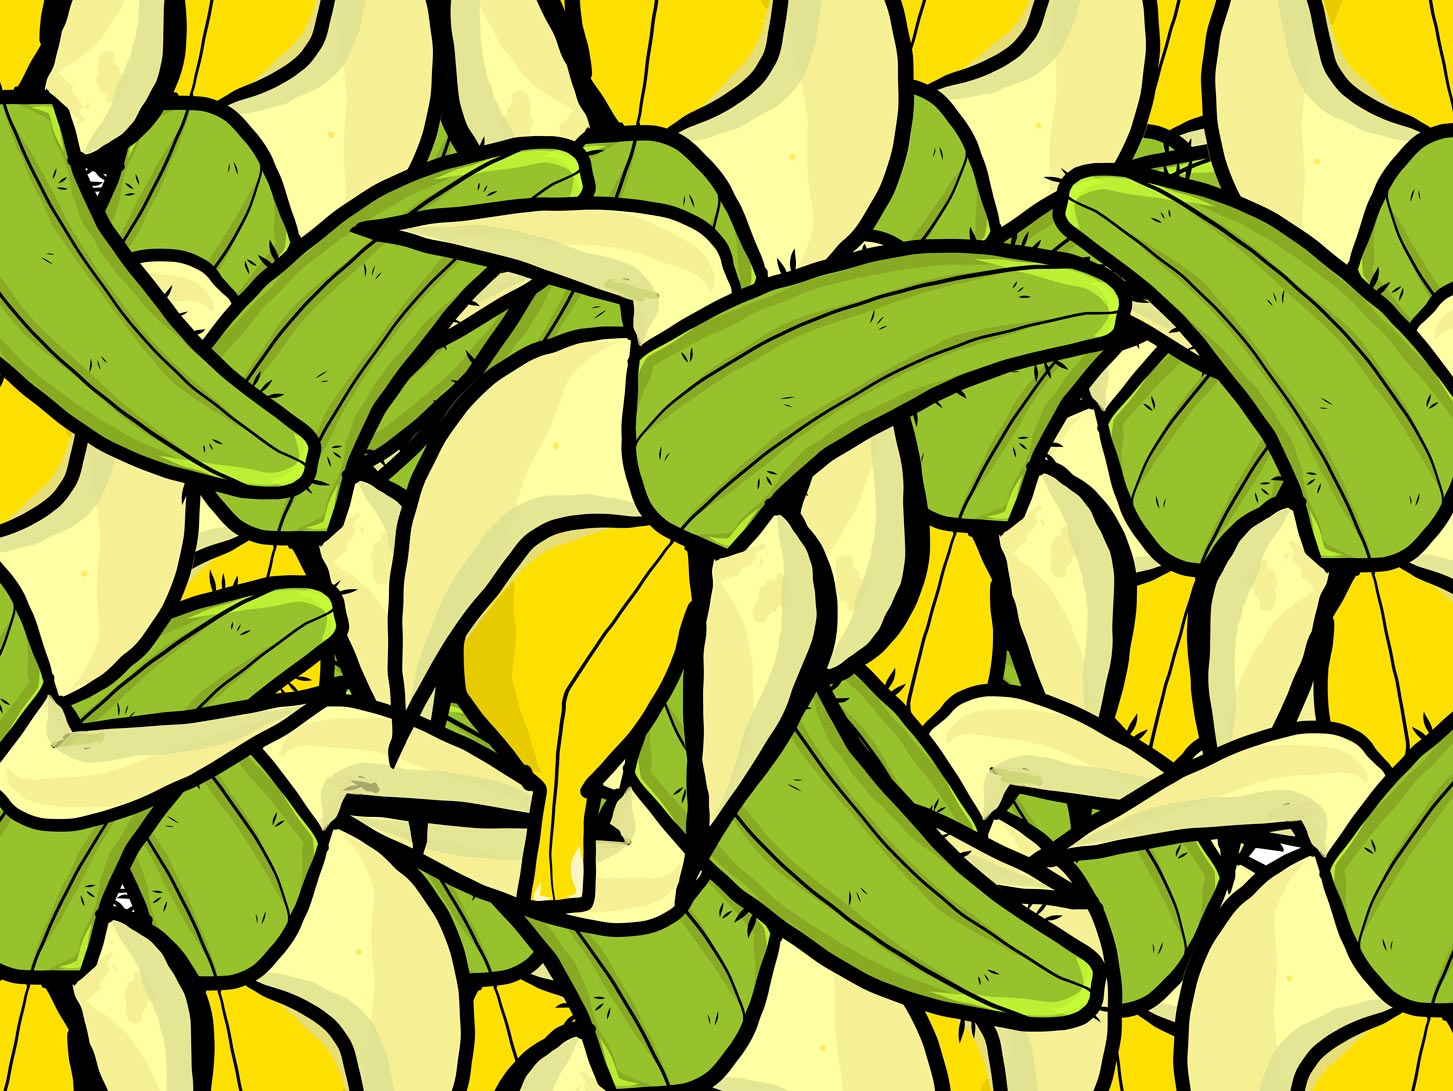 Green inside banana - Juna Lawrence - Brainoon - Friendmade.fm - digital artwork - food design in pop art style